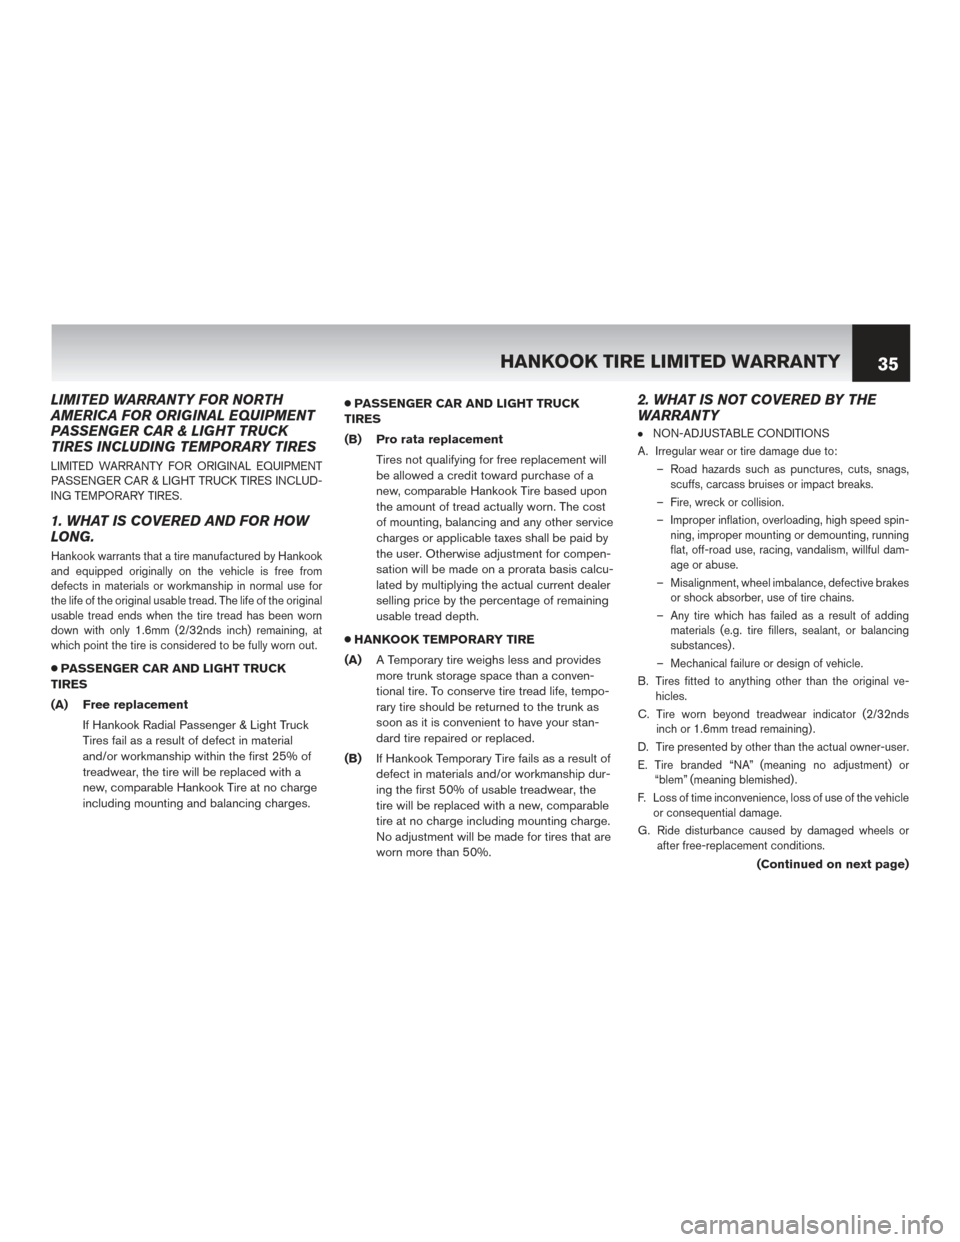 NISSAN ALTIMA 2014 L33 / 5.G Warranty Booklet LIMITED WARRANTY FOR NORTH
AMERICA FOR ORIGINAL EQUIPMENT
PASSENGER CAR & LIGHT TRUCK
TIRES INCLUDING TEMPORARY TIRES
LIMITED WARRANTY FOR ORIGINAL EQUIPMENT
PASSENGER CAR & LIGHT TRUCK TIRES INCLUD-
